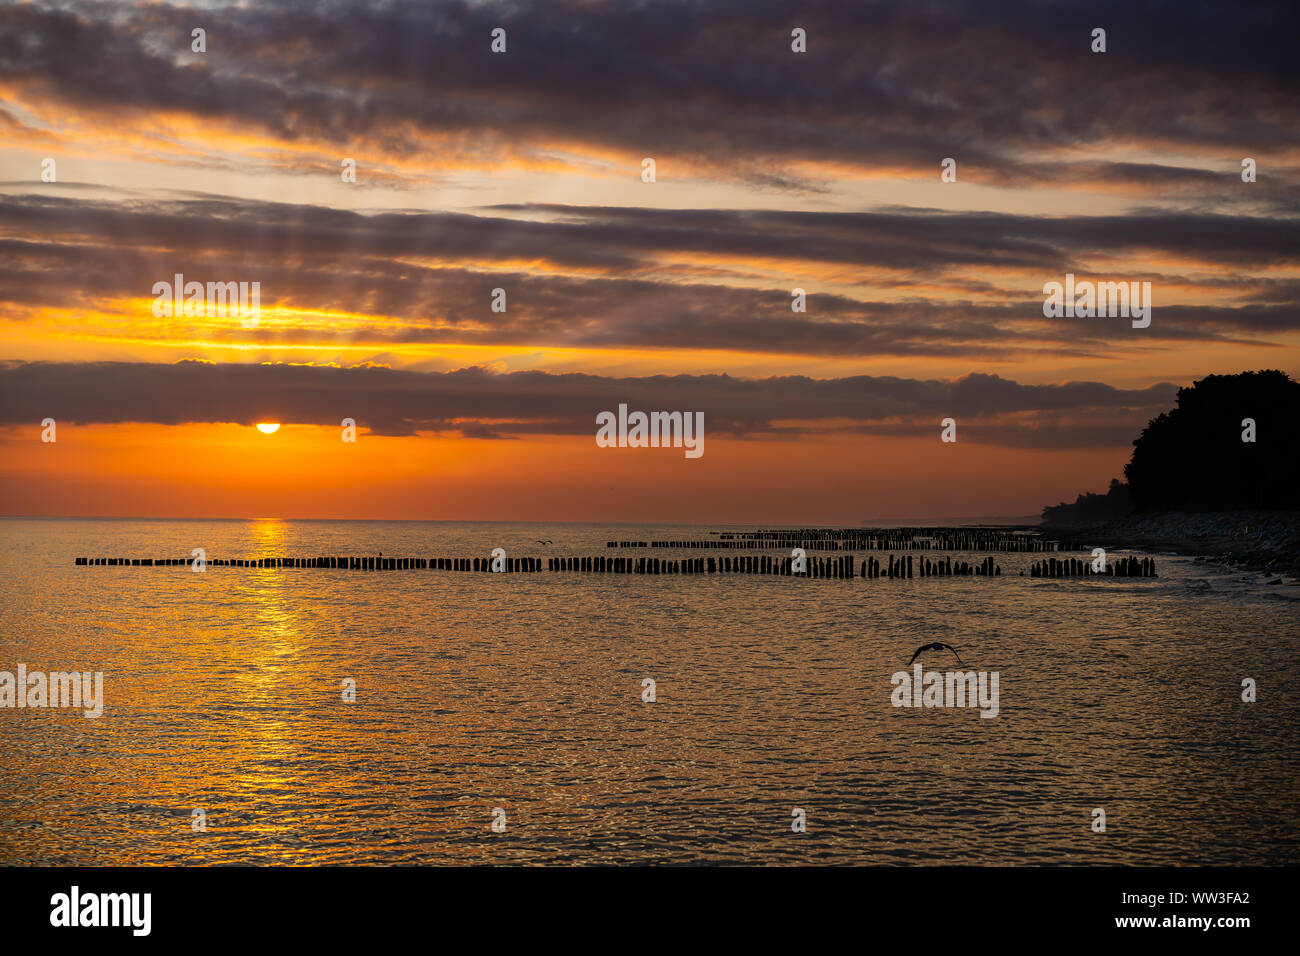 sunset over the sea - evening landscape Stock Photo